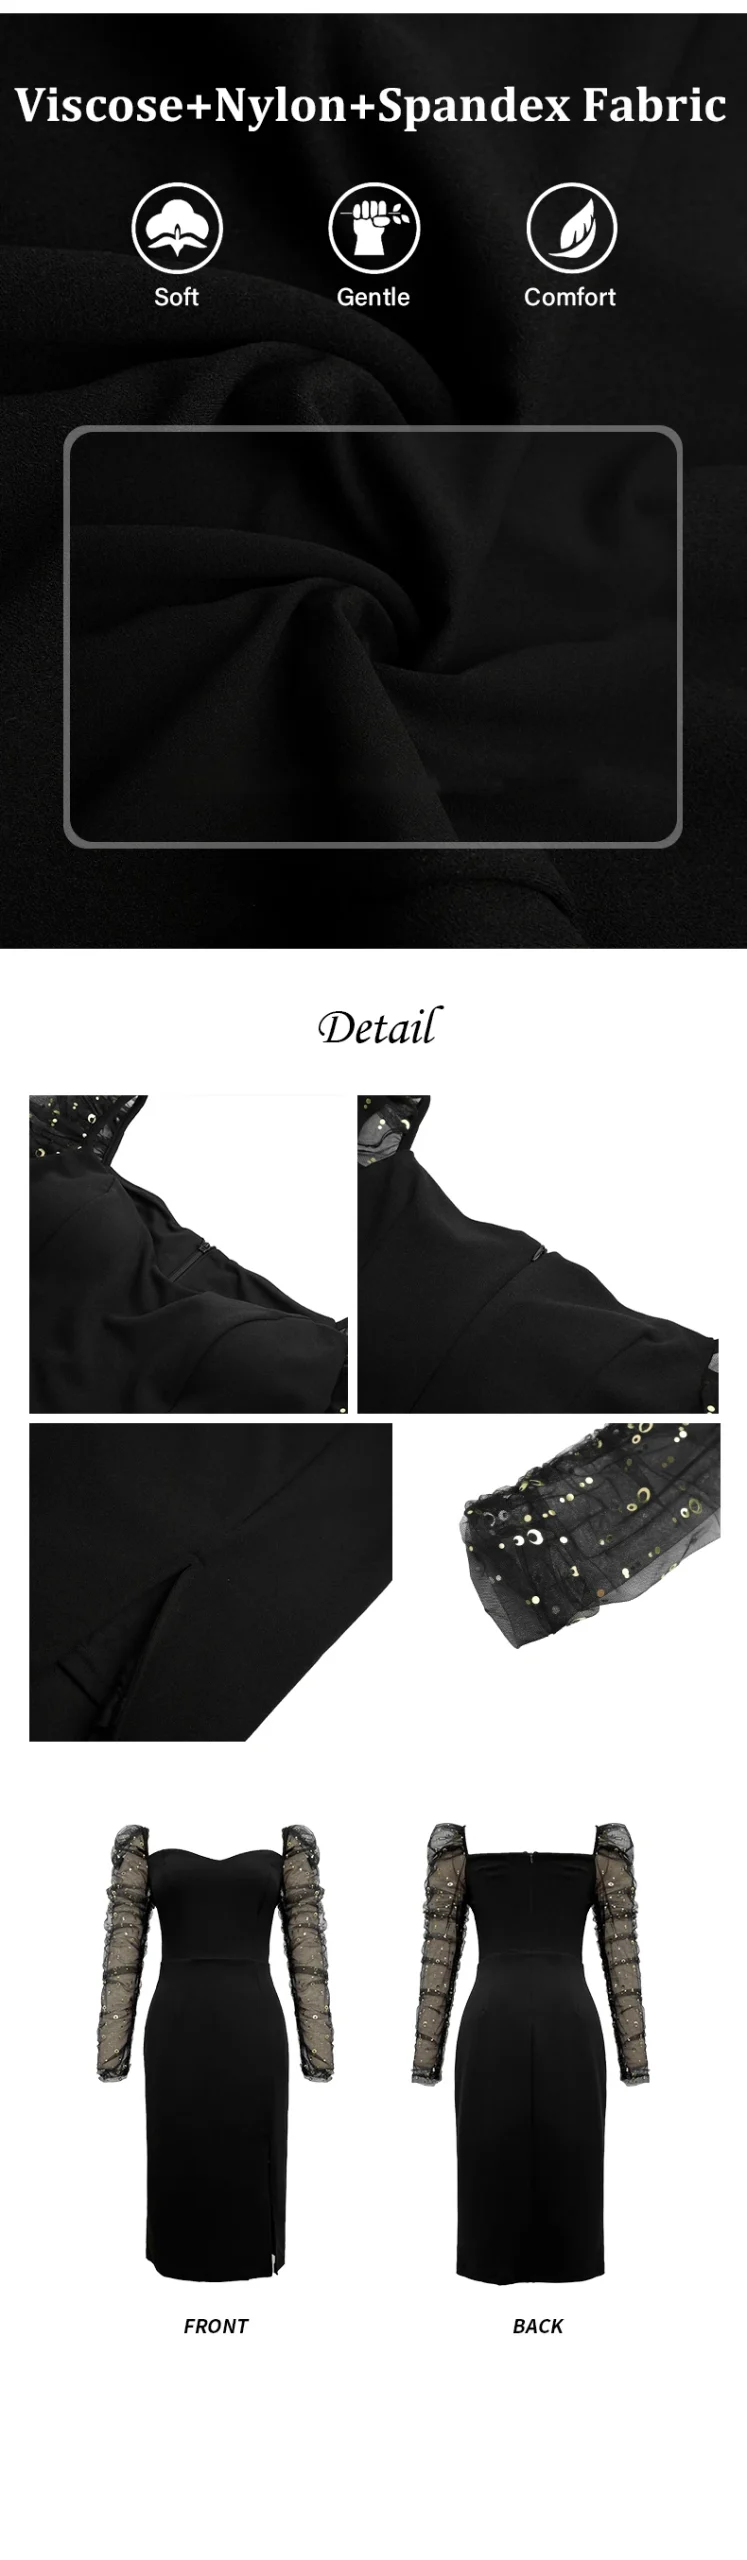 Puffed Long Sleeves Elegant Black Dress